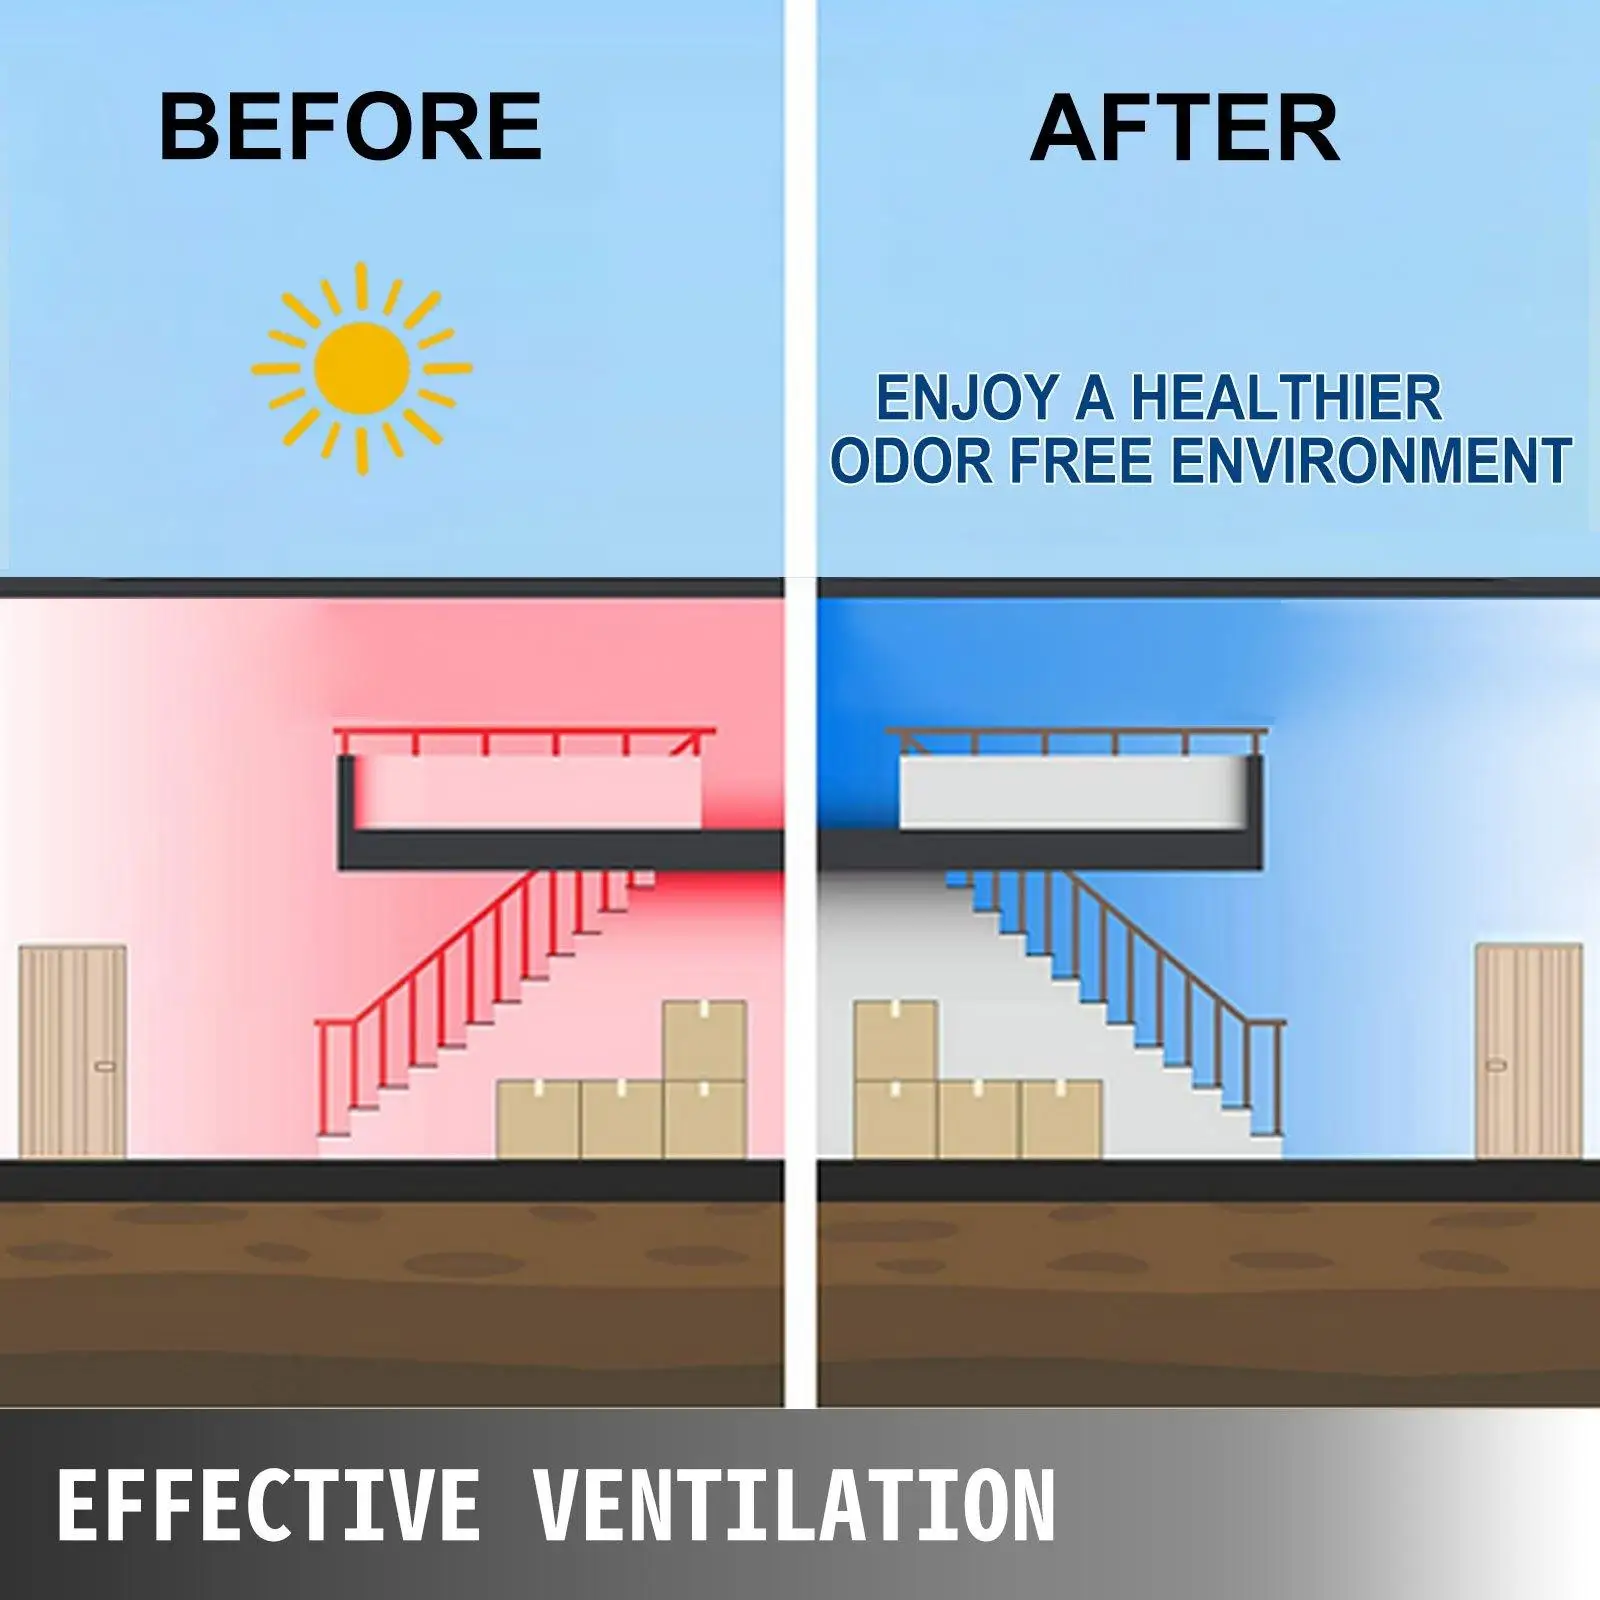 Effective ventilation